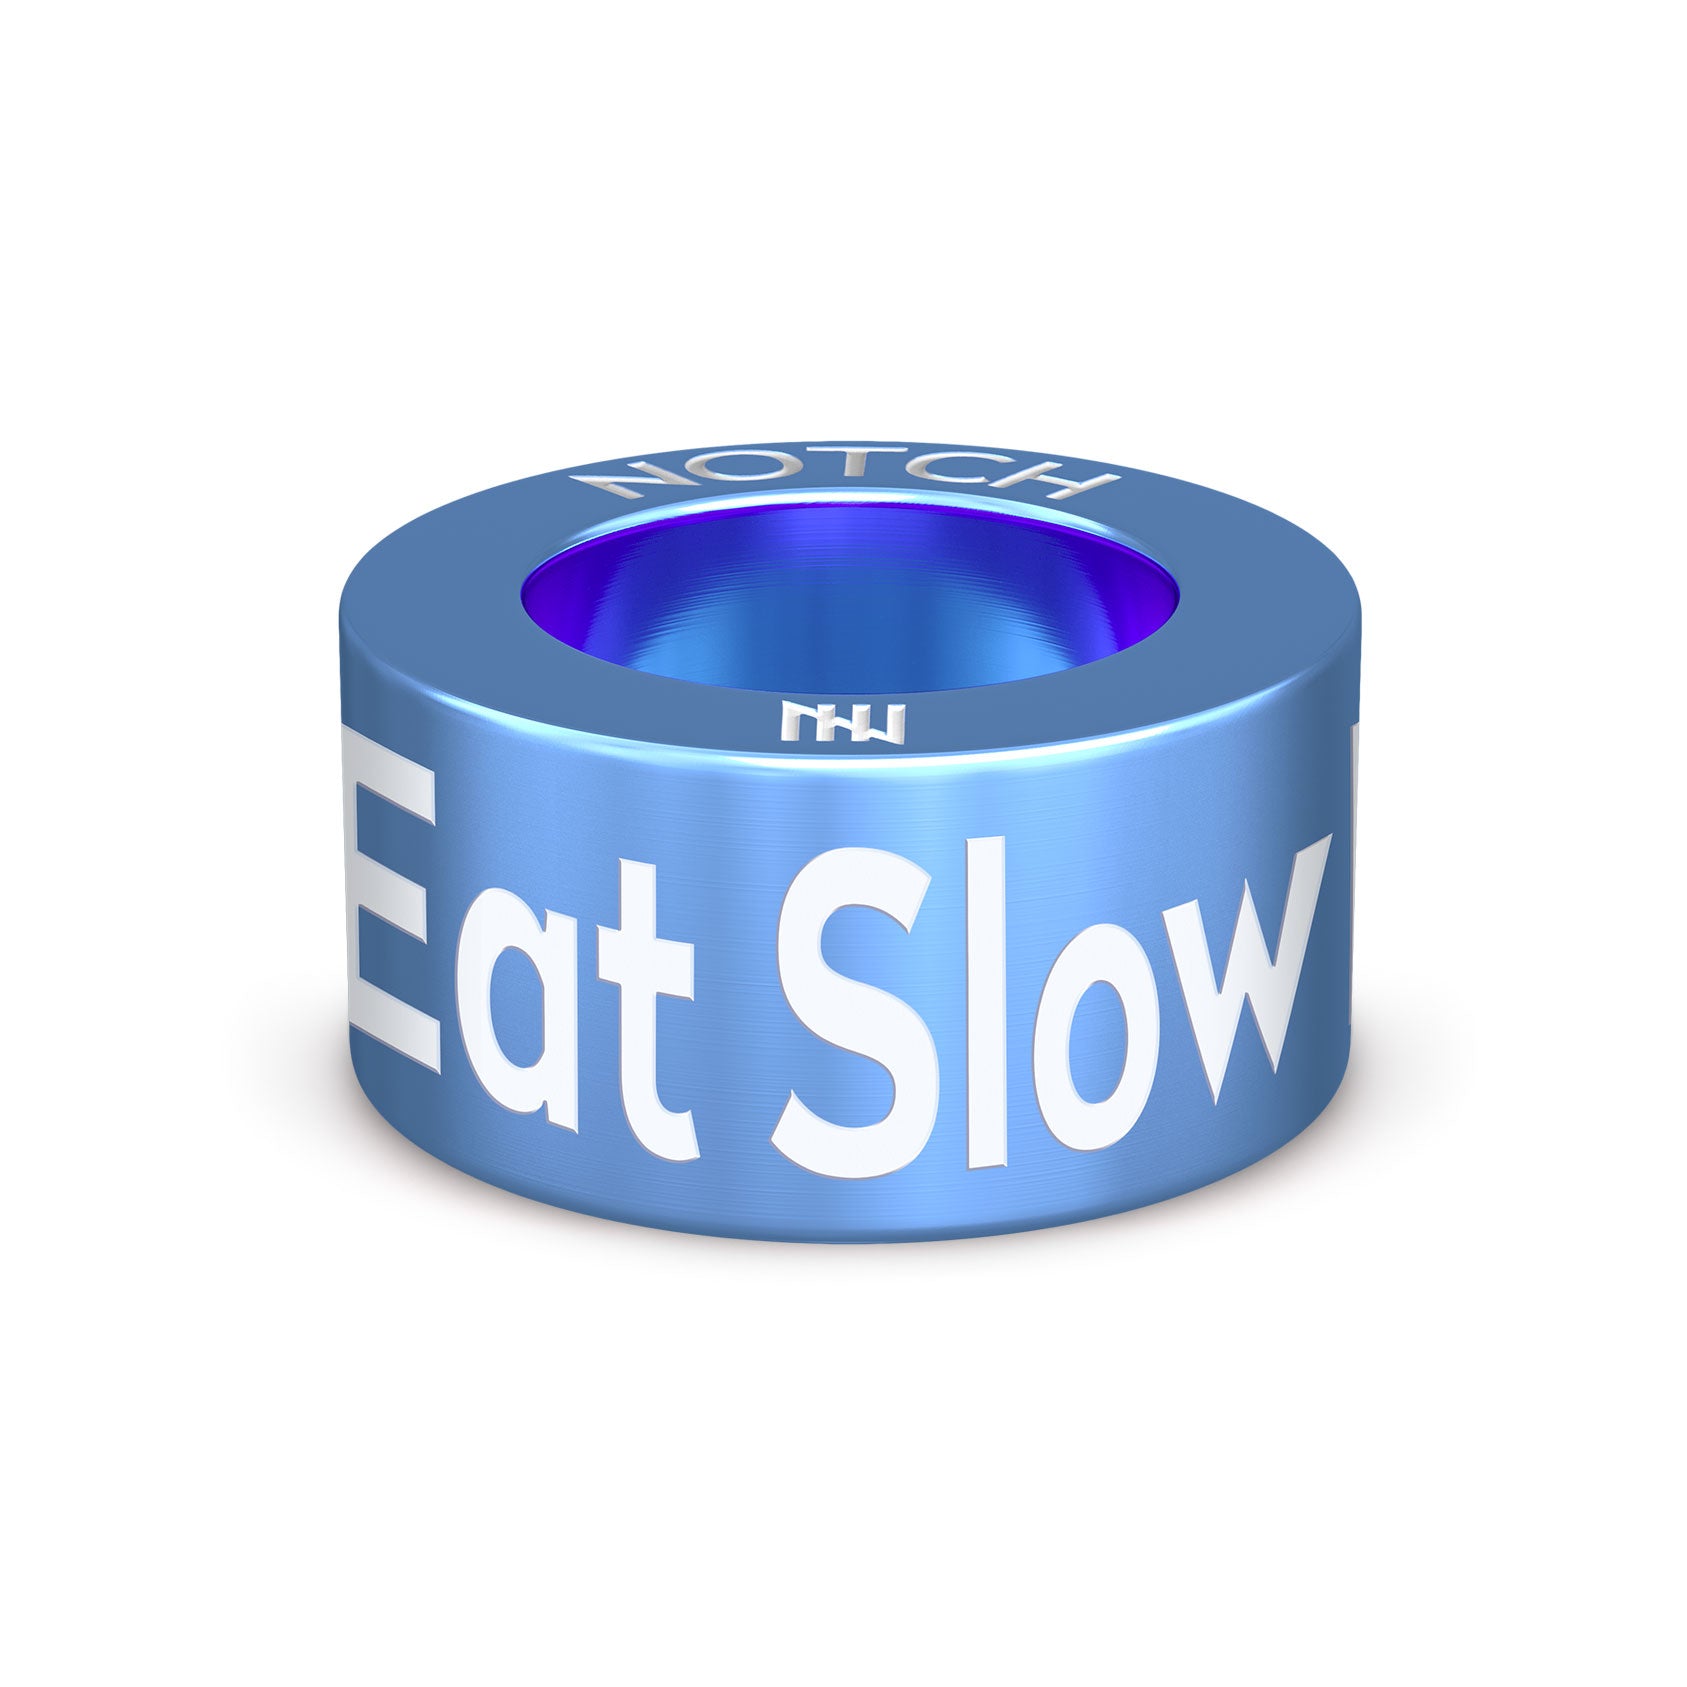 Eat Slowly NOTCH Charm